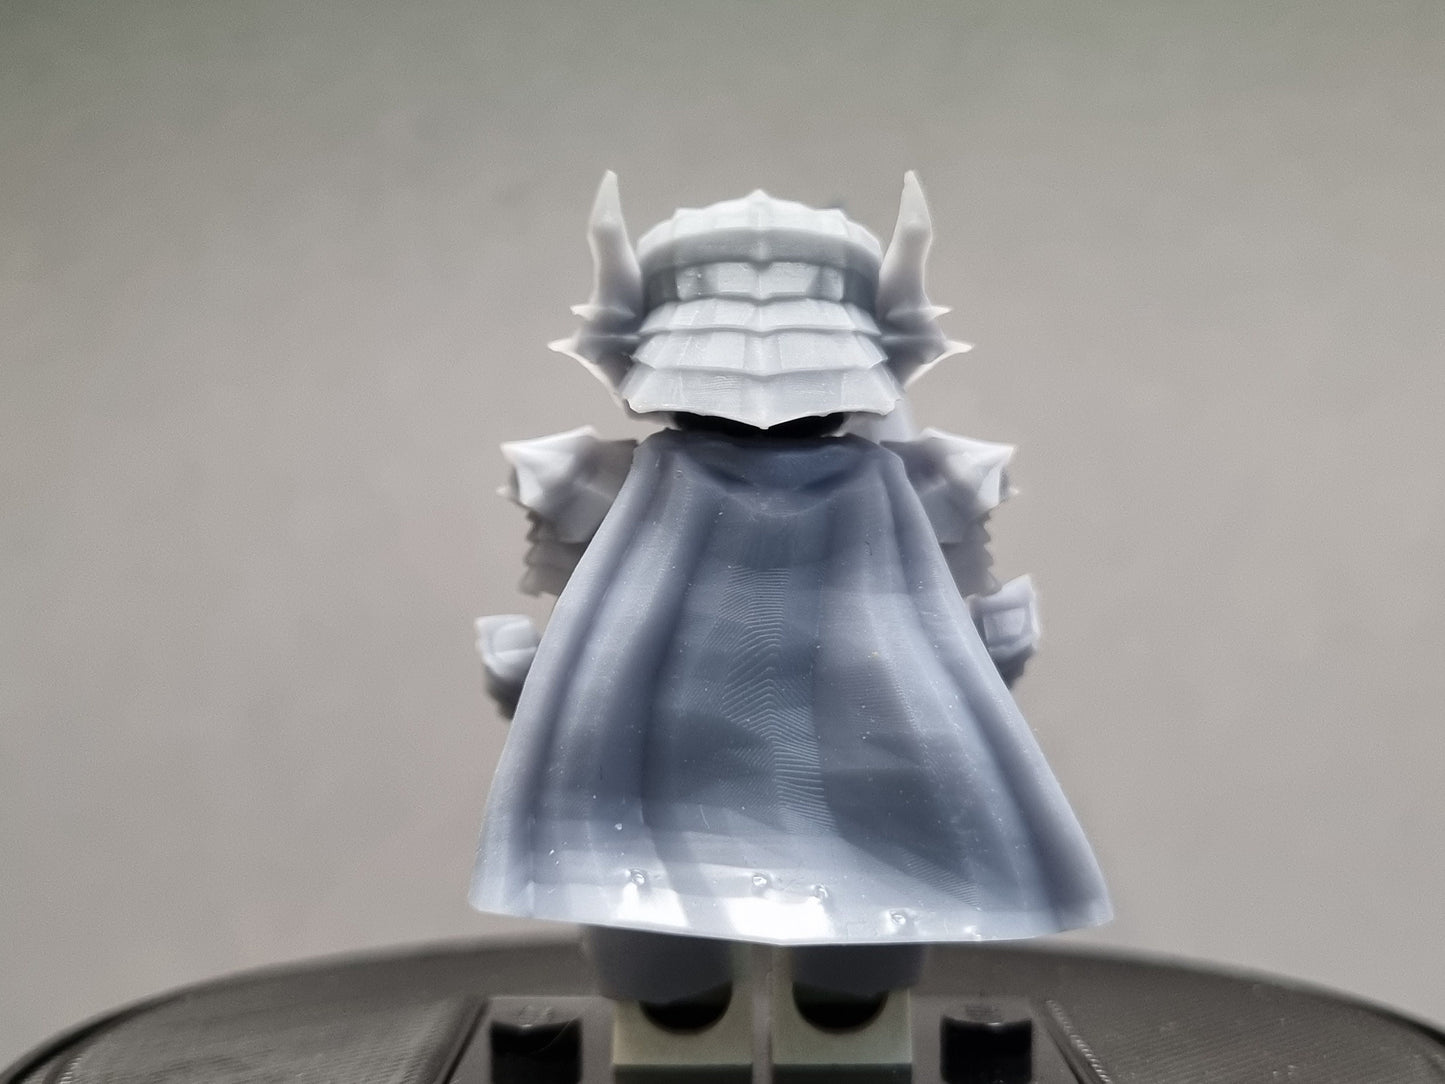 Building toy custom 3D printed dog armor set